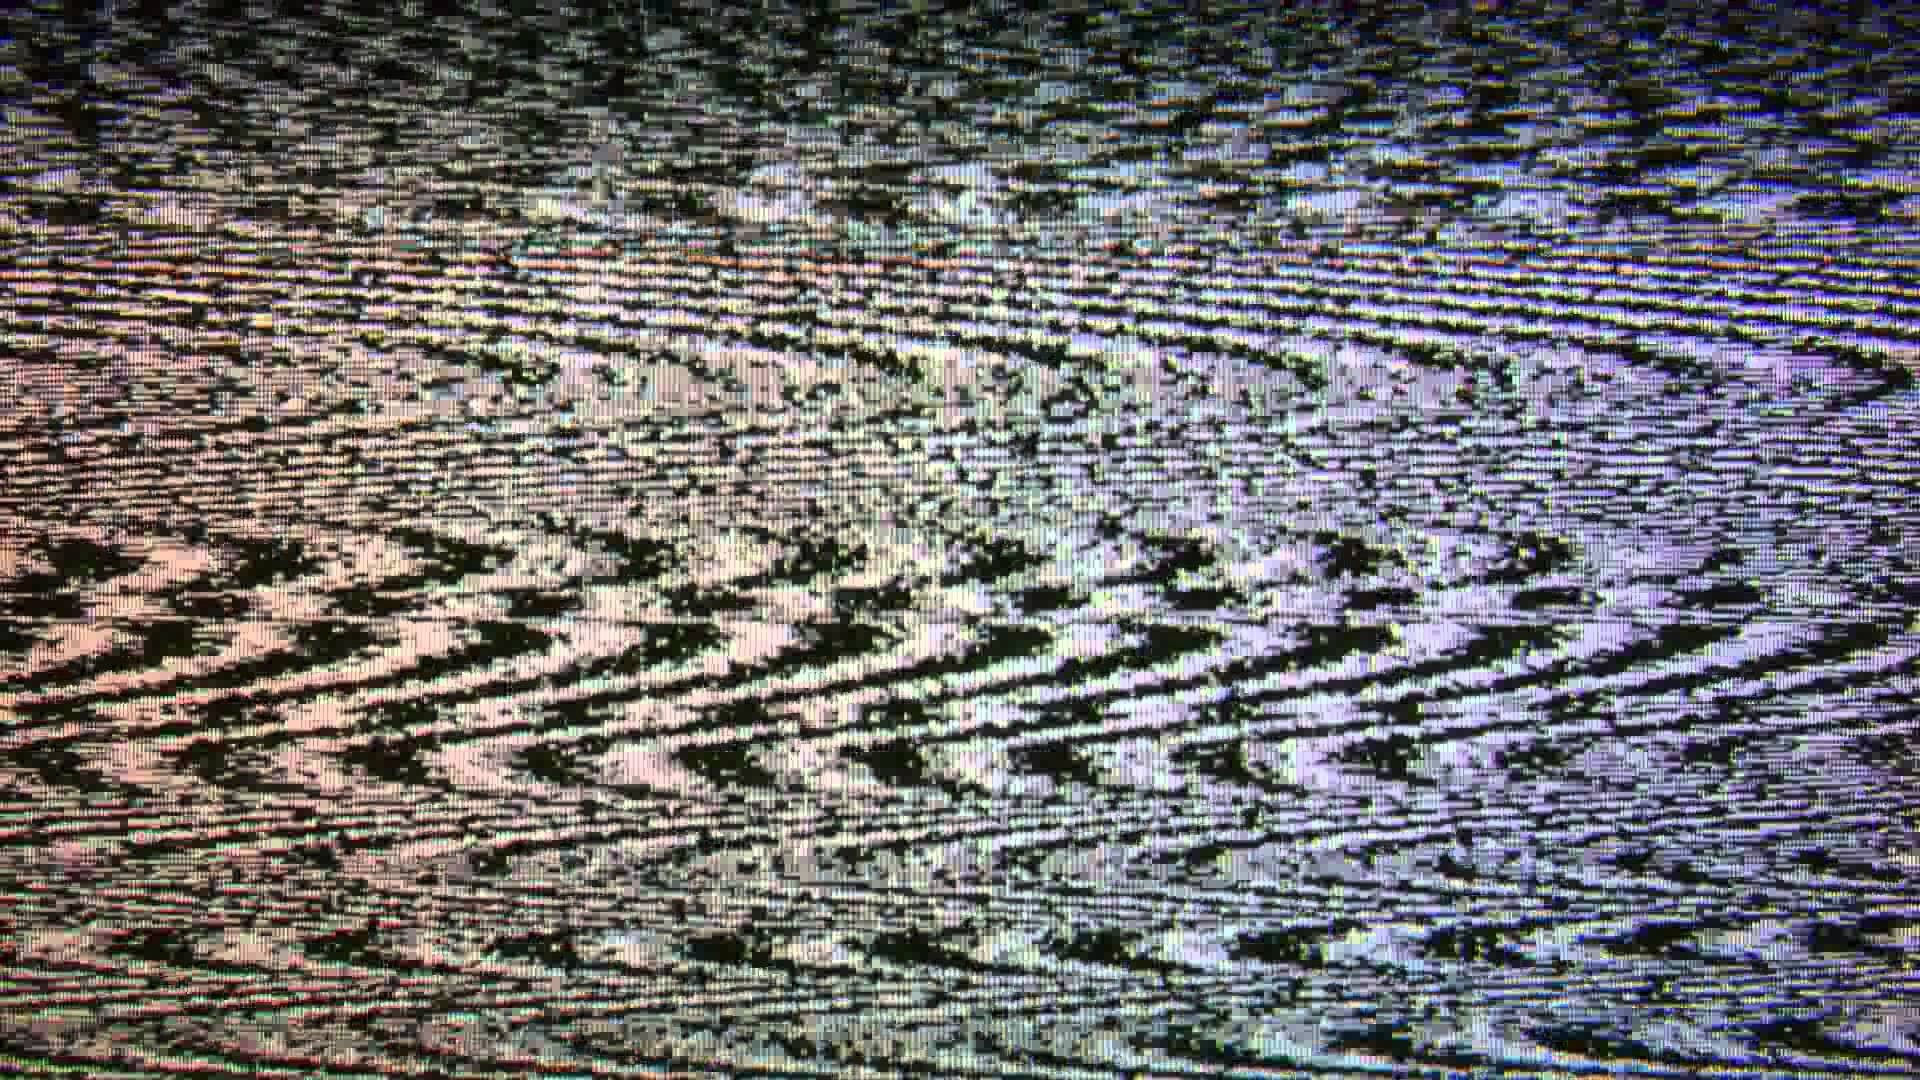 Ð¢ð' Ñˆñƒð¼,tv Static Hd ,ð²ð¸ð´ðµð¾ñ„ñƒñ‚ð°ð¶ - Tv Static , HD Wallpaper & Backgrounds